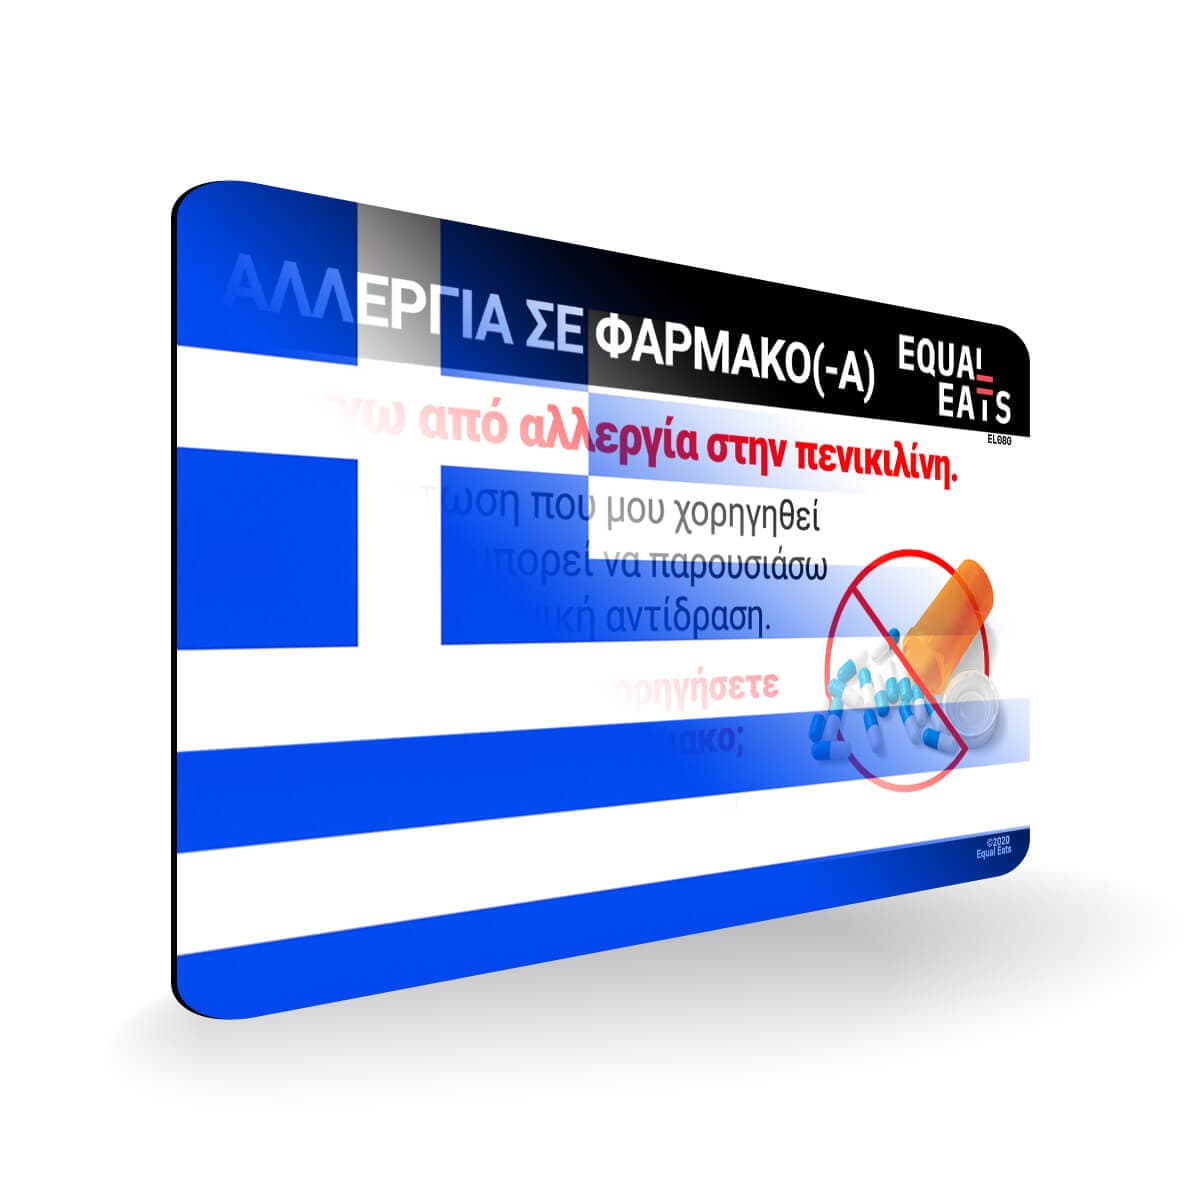 Penicillin Allergy in Greek. Penicillin medical ID Card for Greece